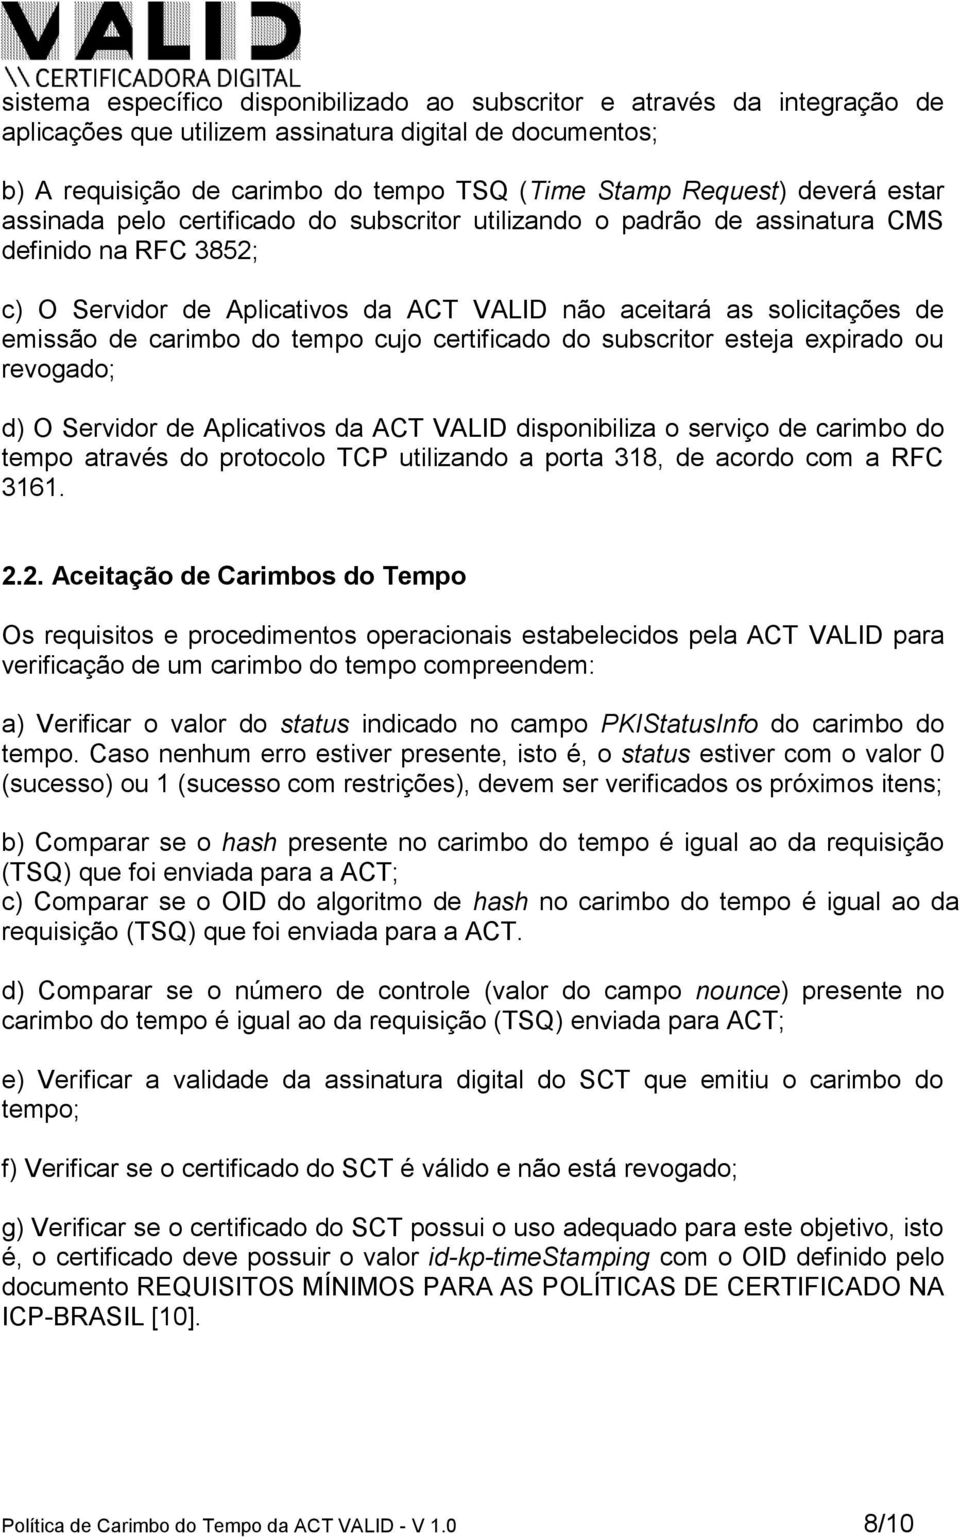 carimbo do tempo cujo certificado do subscritor esteja expirado ou revogado; d) O Servidor de Aplicativos da ACT VALID disponibiliza o serviço de carimbo do tempo através do protocolo TCP utilizando